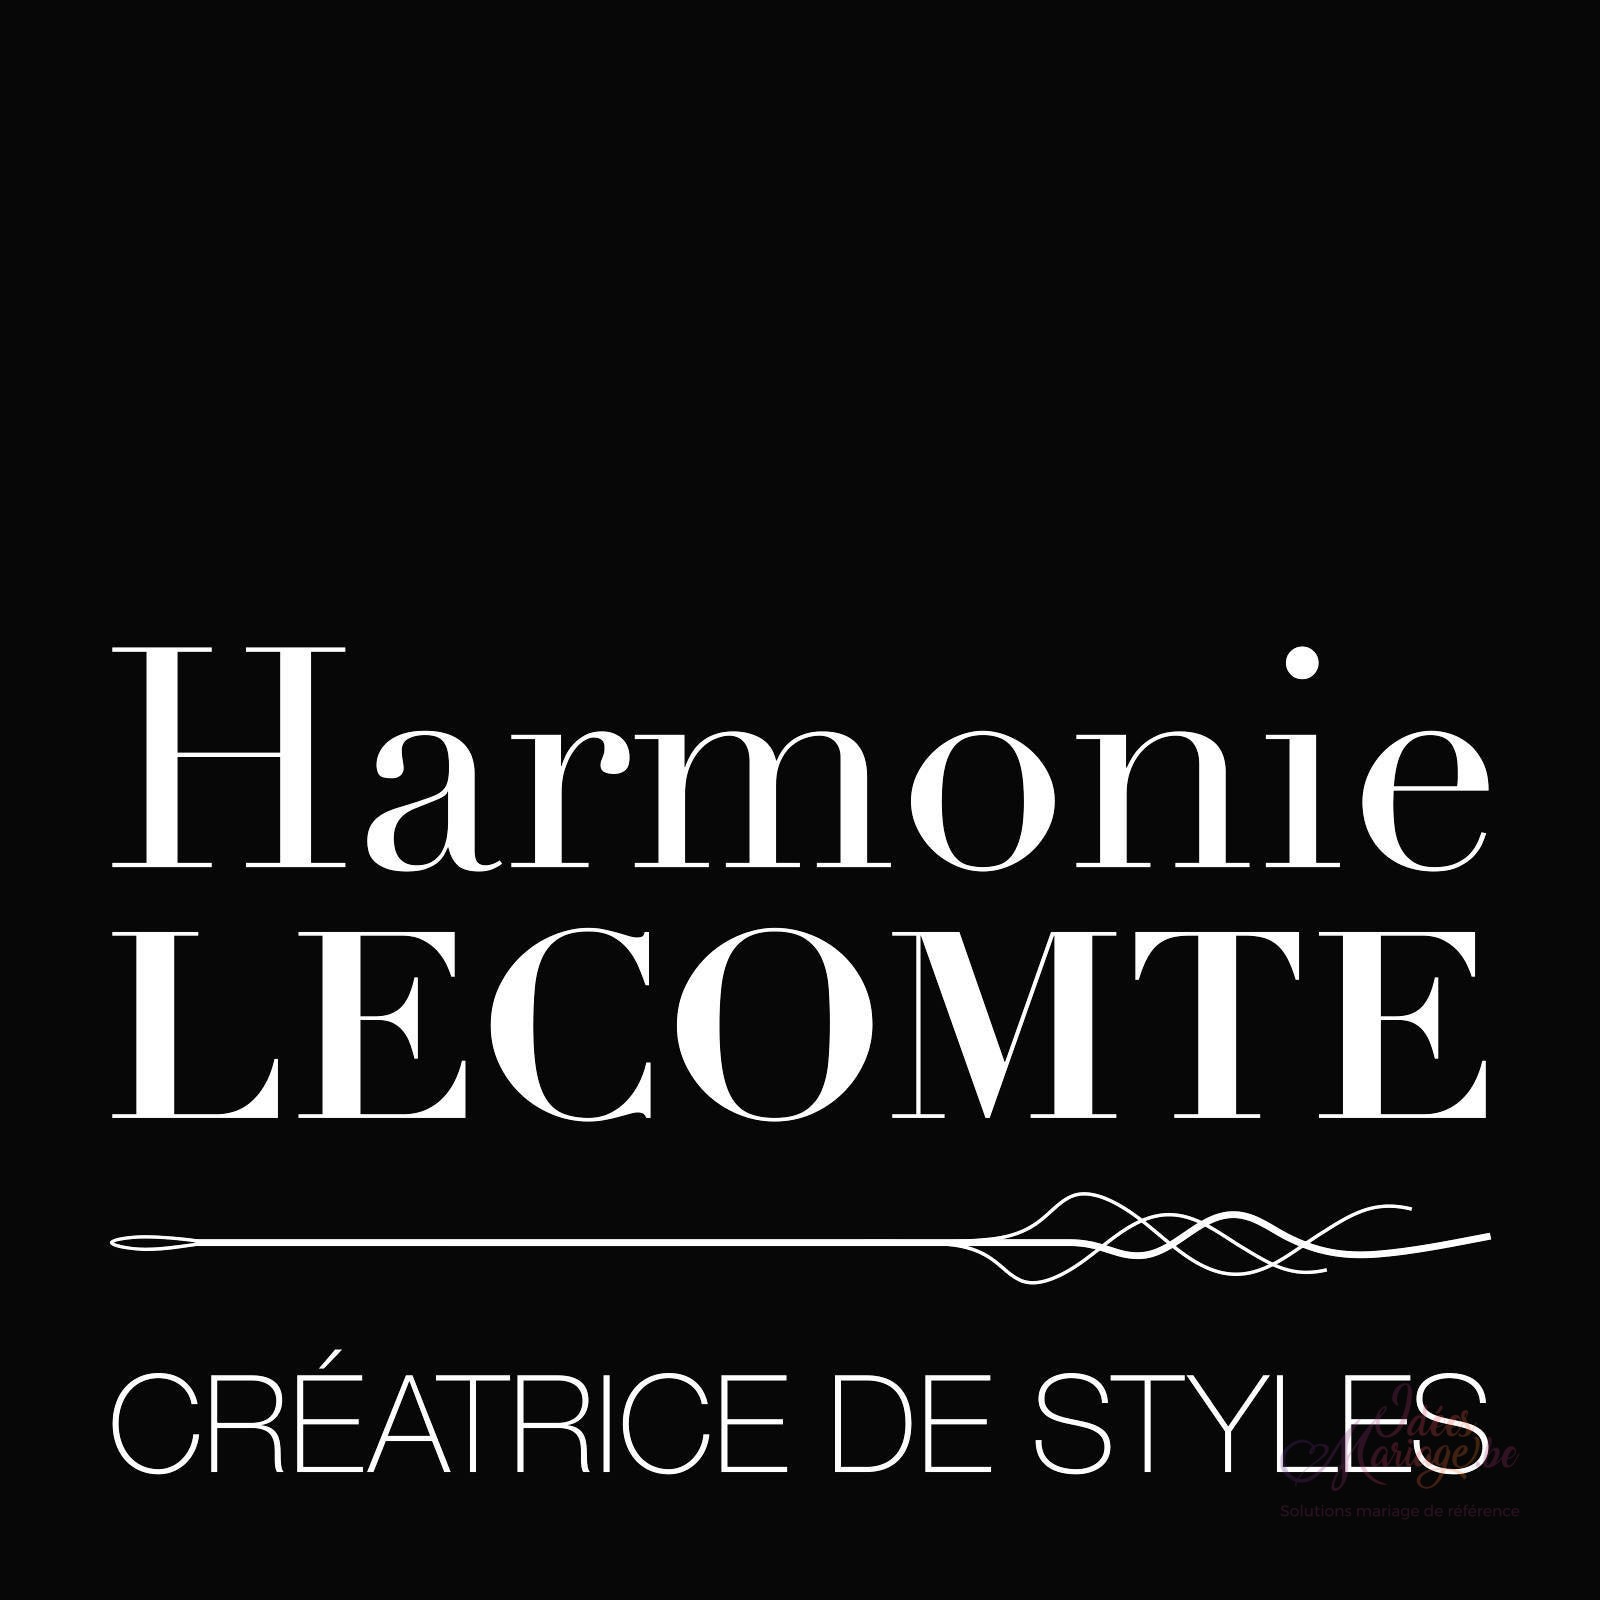 Harmonie Lecomte